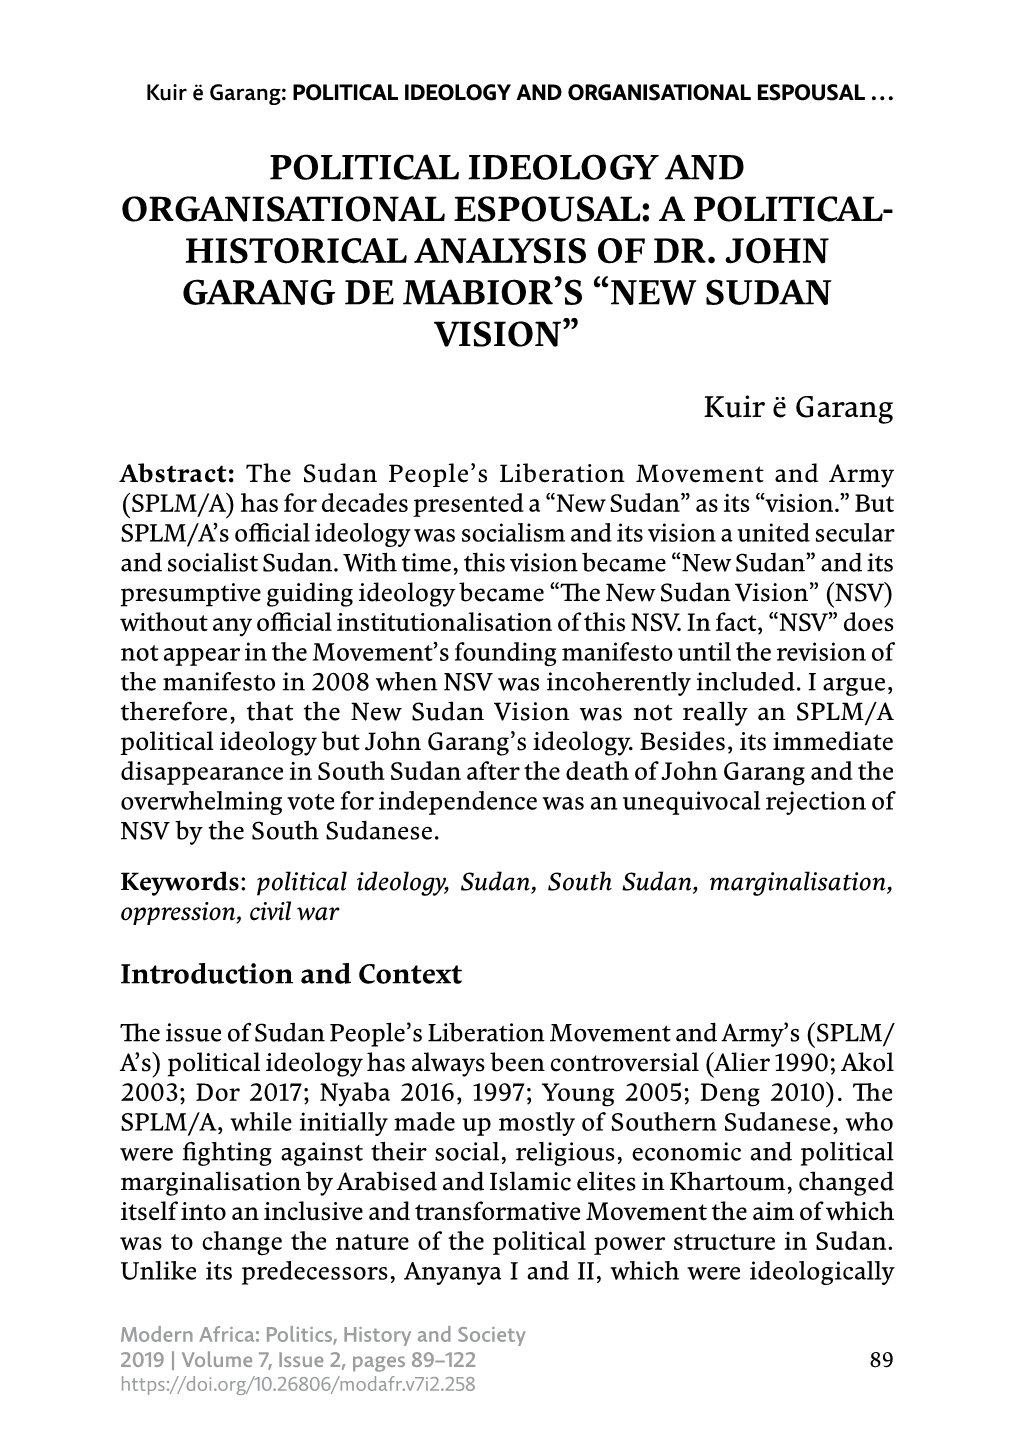 Historical Analysis of Dr. John Garang De Mabior's